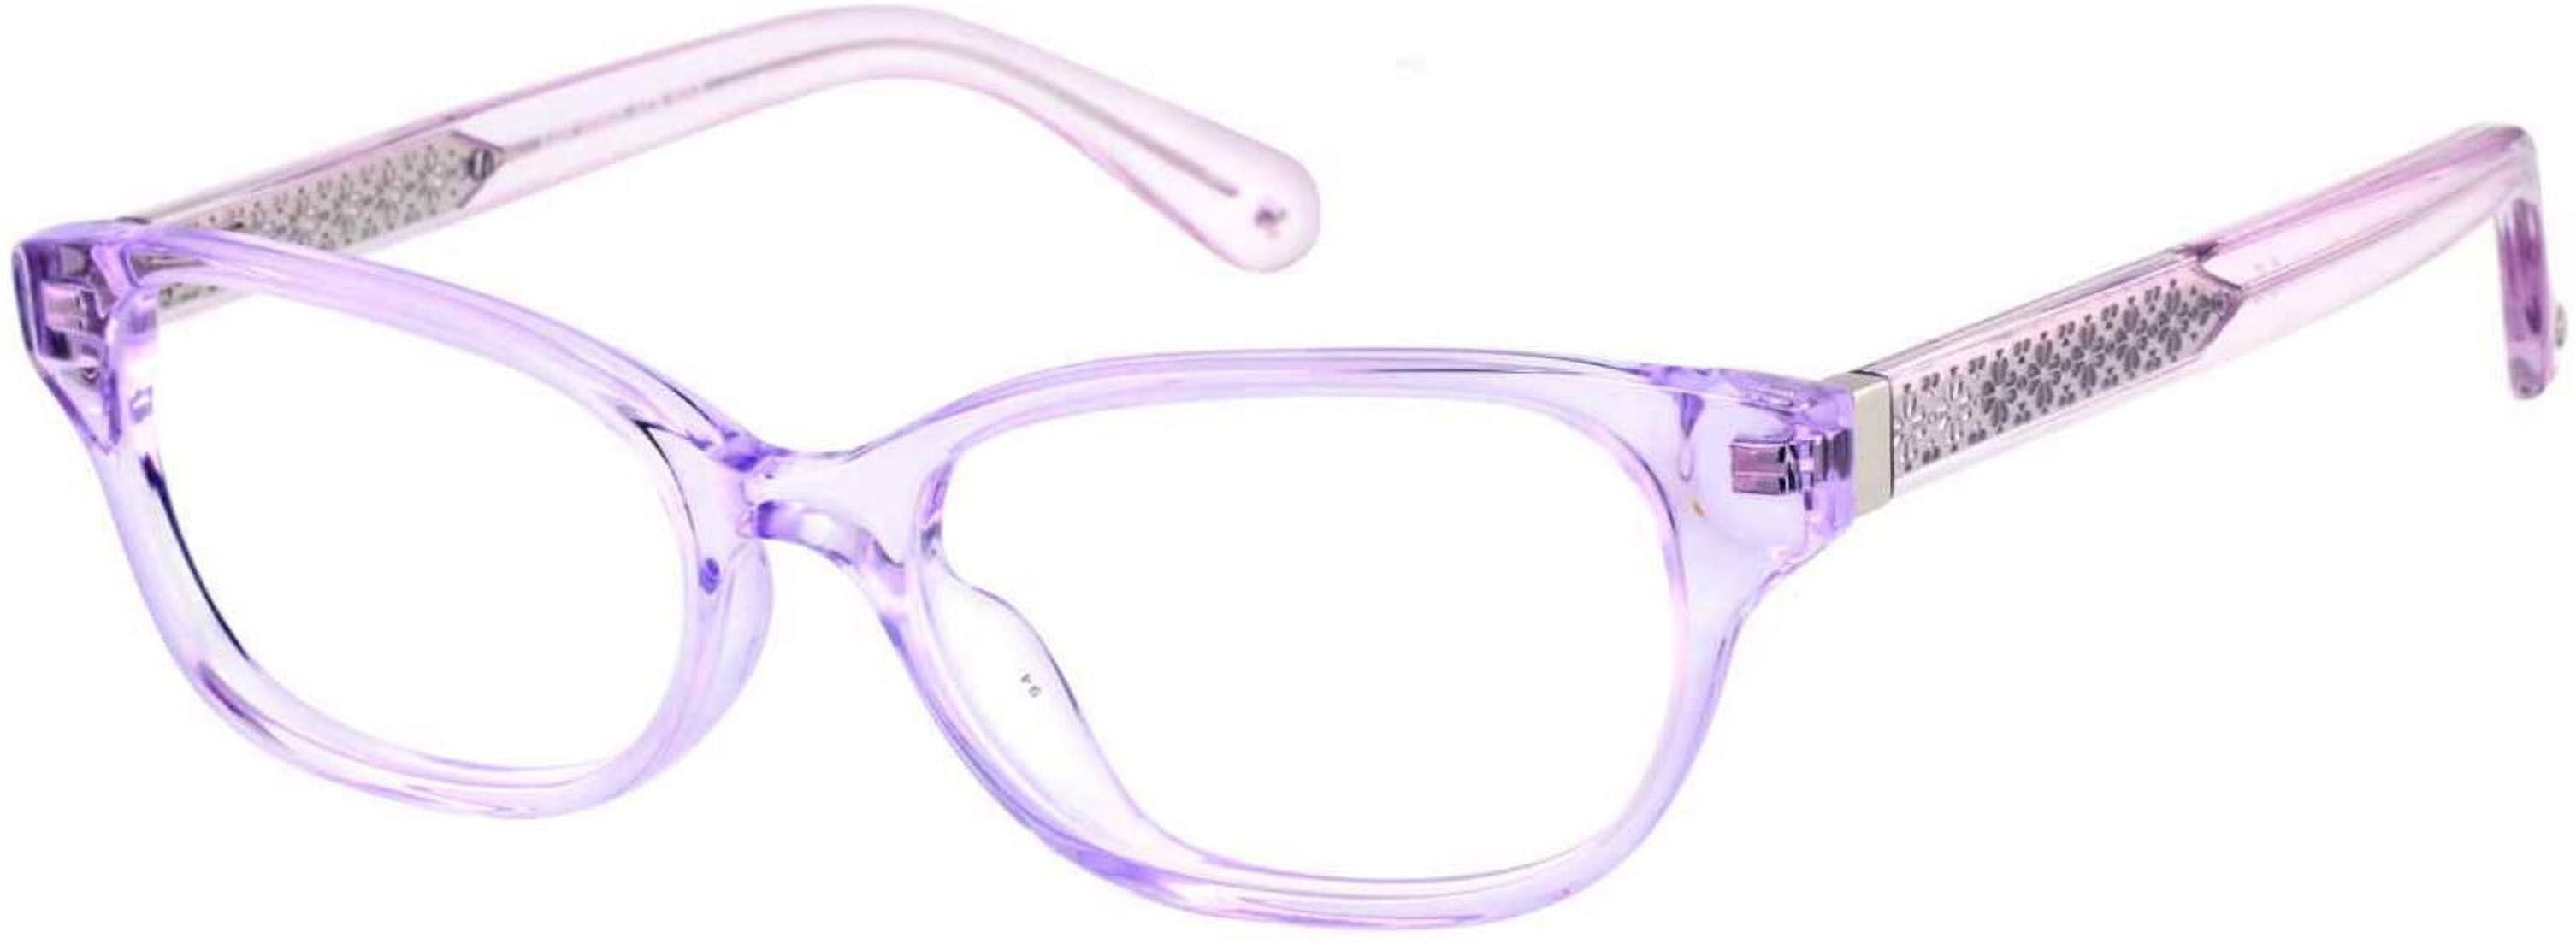 Kate Spade Glasses Case – SteppinHighShoeBoutique